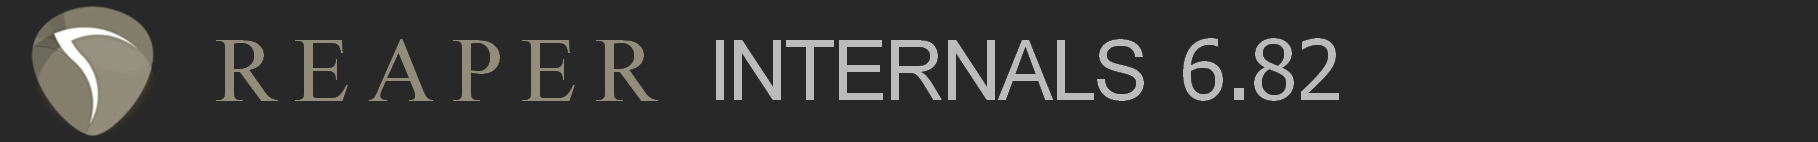 Reaper internals logo